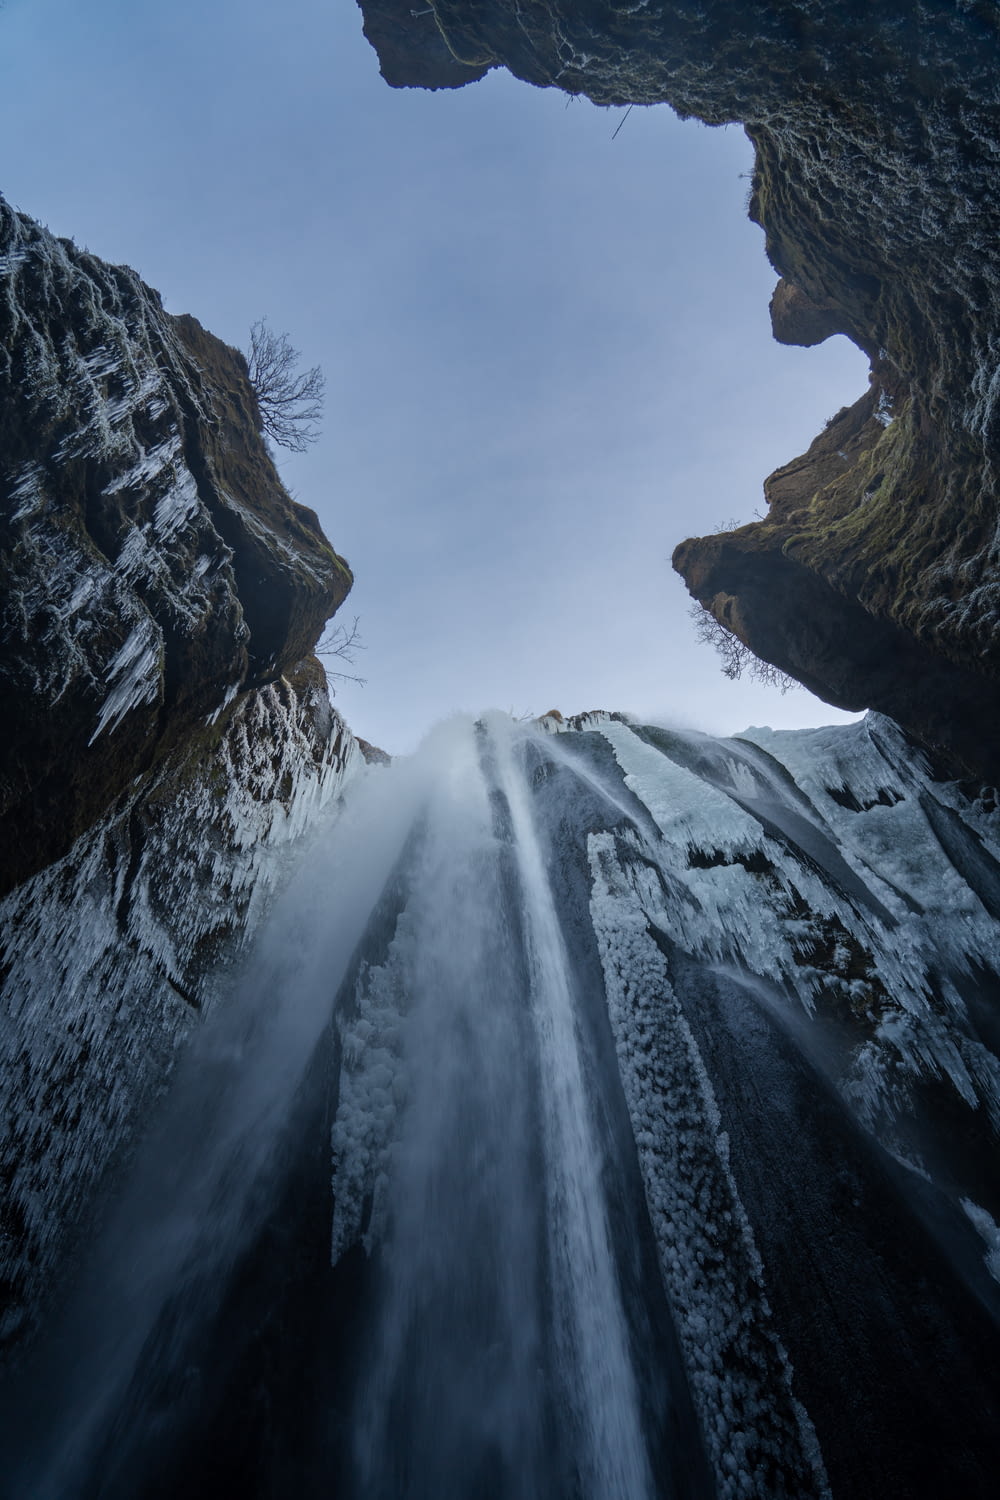 a waterfall between large rocks